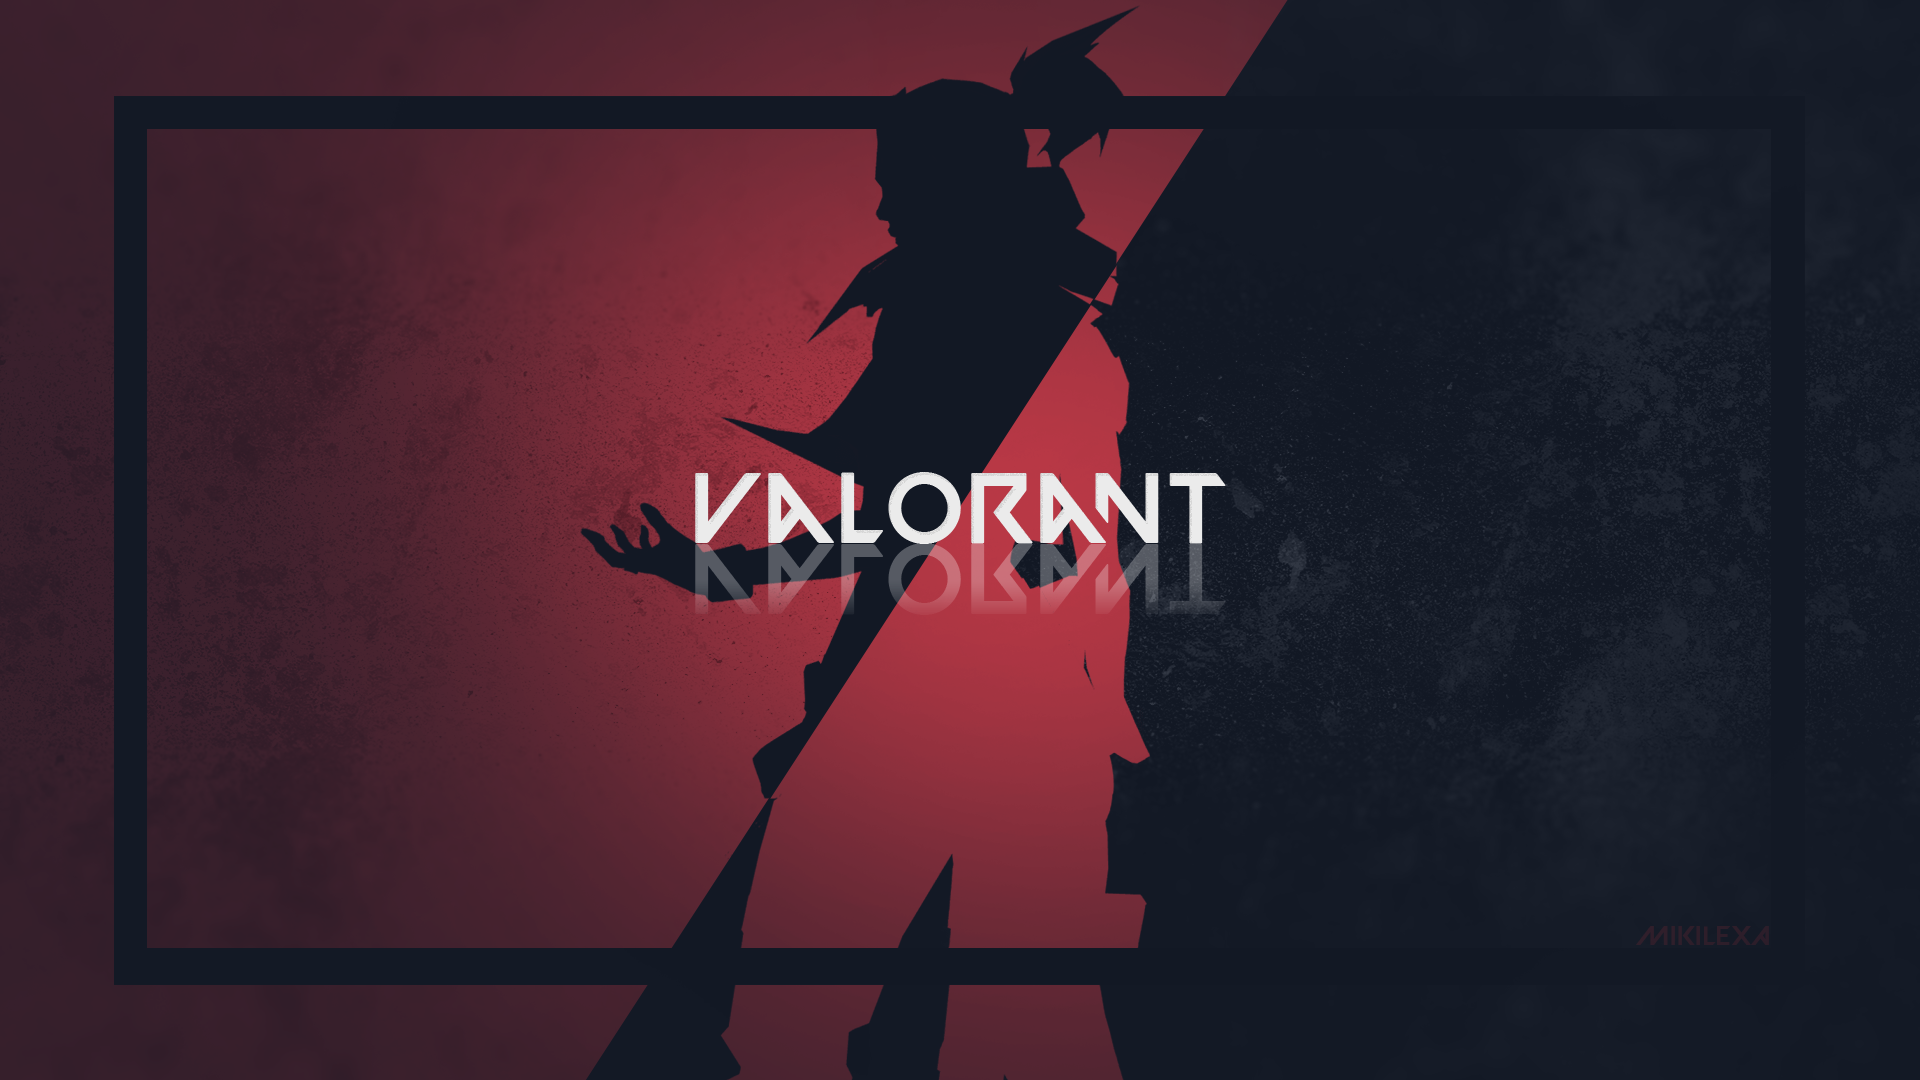 Valorant Logo Wallpapers